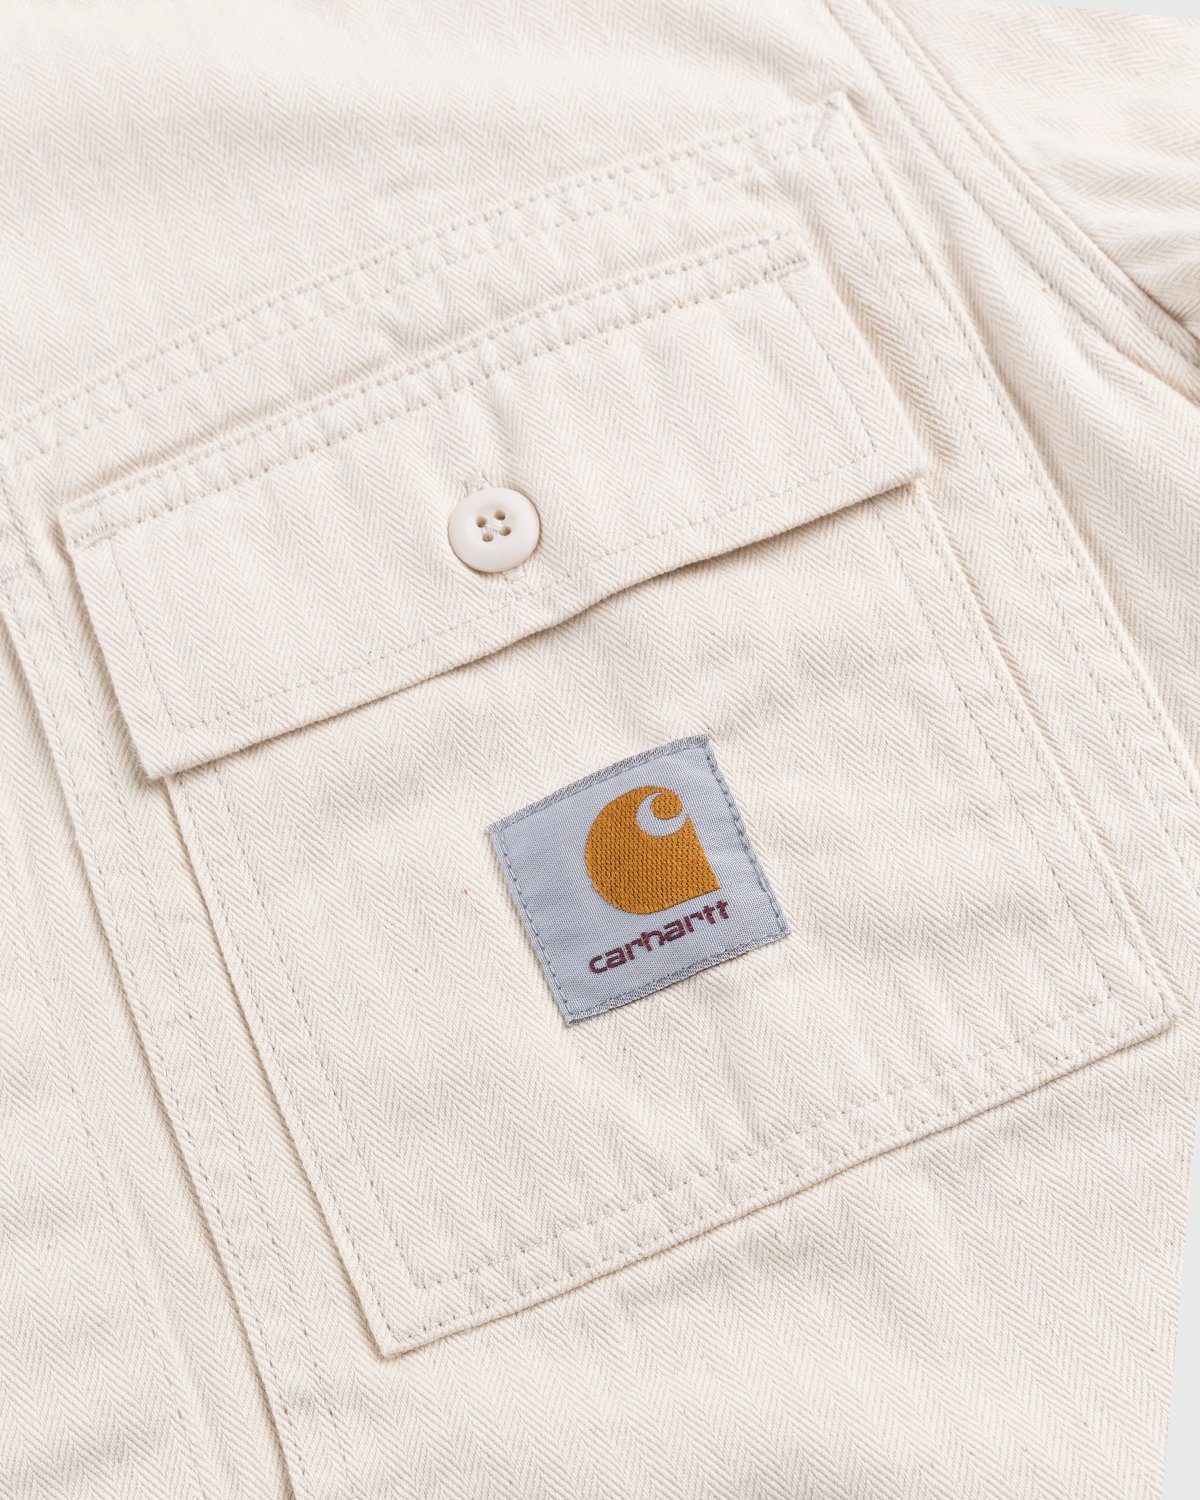 Carhartt WIP - Charter Shirt Natural - Clothing - Beige - Image 5